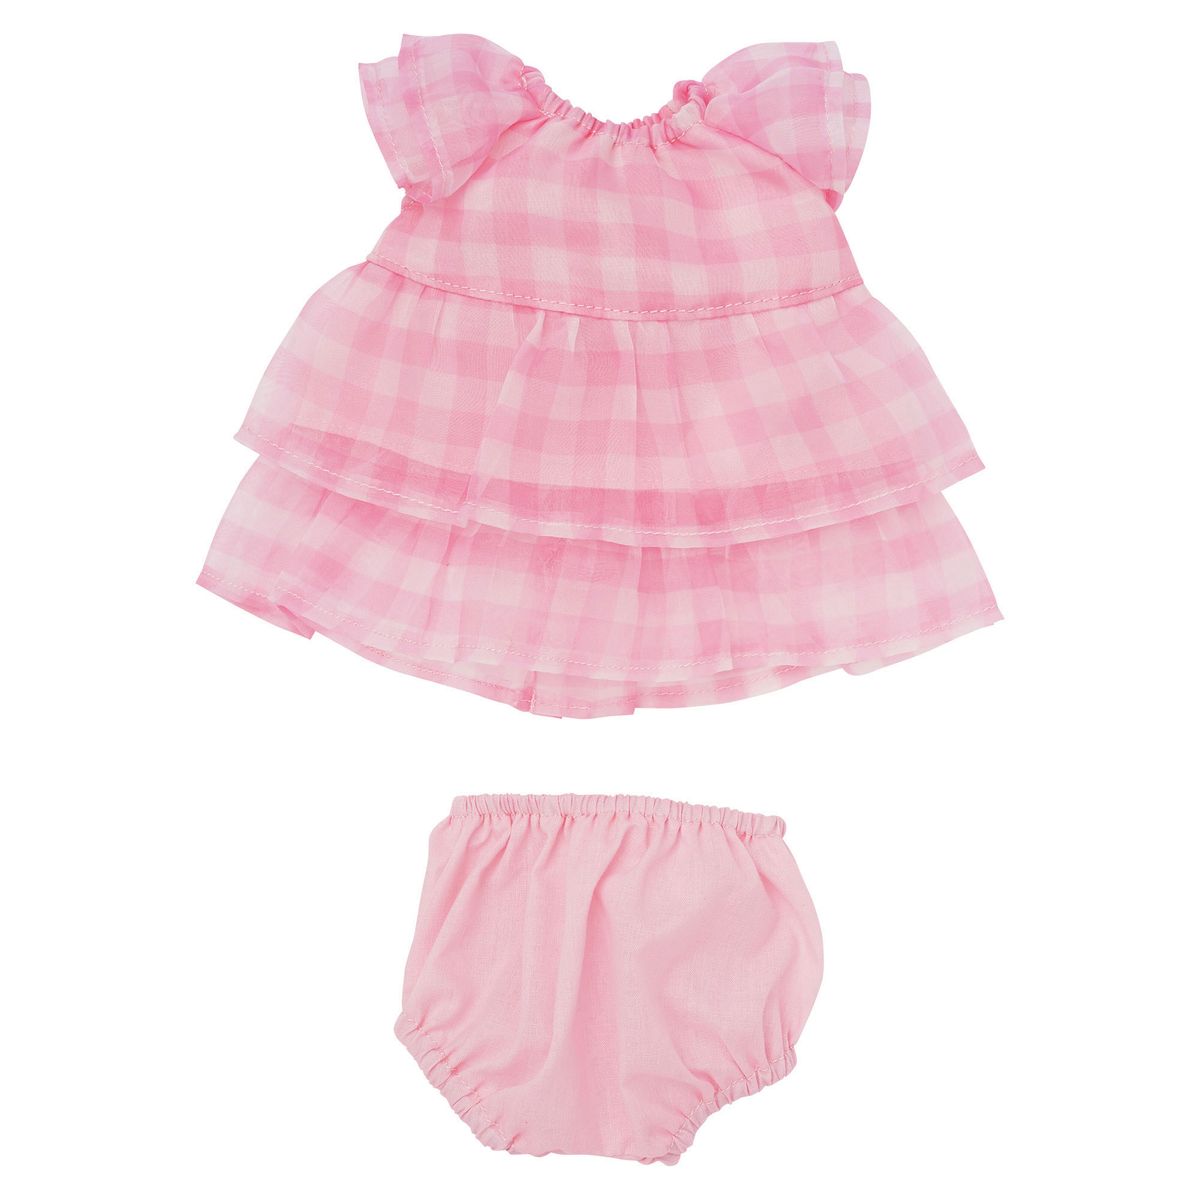 [RDY] [送料無料] Manhattan Toy Baby Stella Pretty in Pink 15 "ベビードール用ドレス [楽天海外通販] | Manhattan Toy Baby Stella Pretty in Pink Baby Doll Dress for 15" Baby Dolls